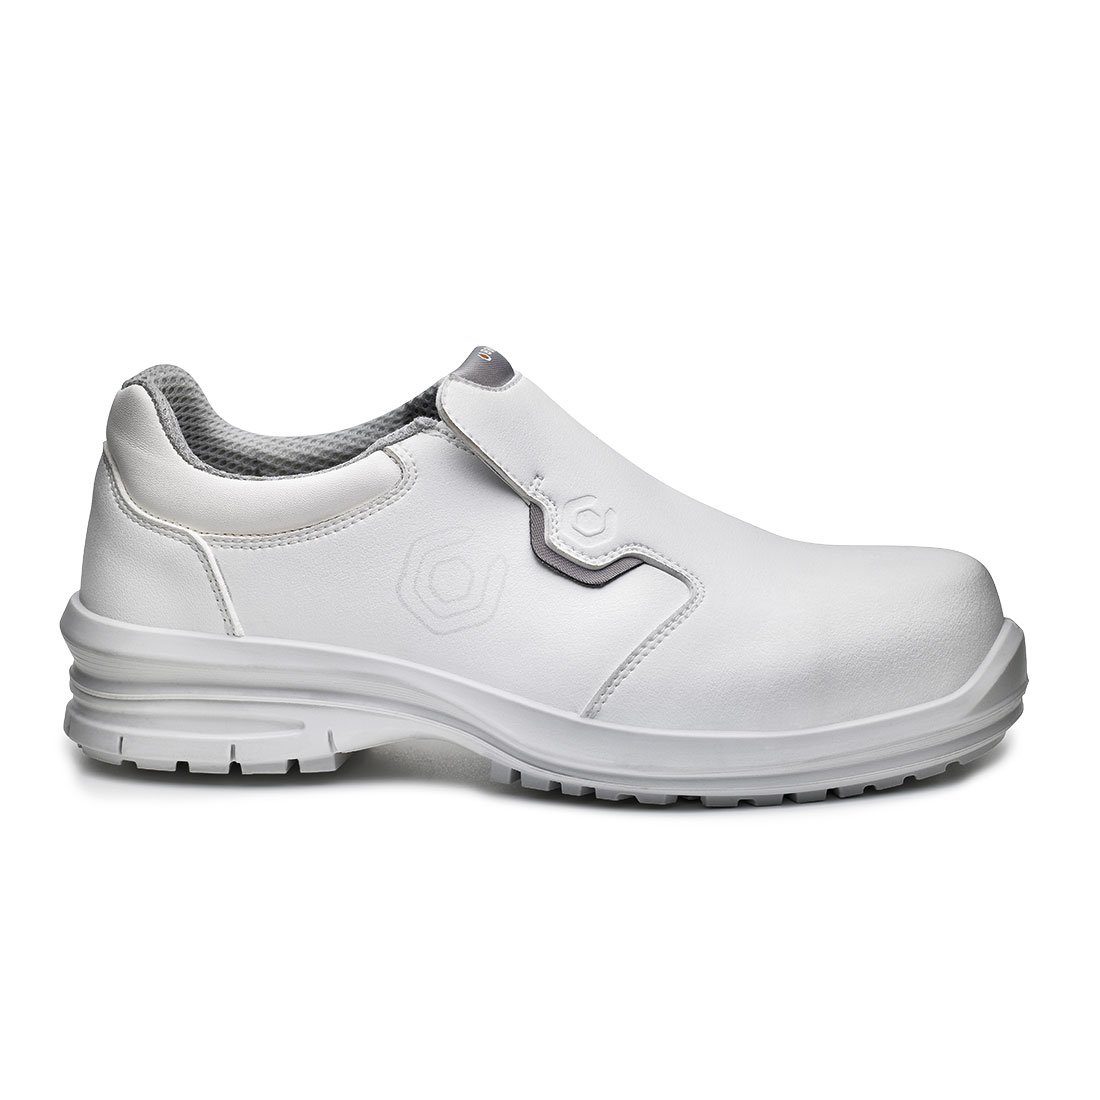 Base Footwear Sicherheitsschuhe B0962 - Kuma S2 SRC mit Schutzkappe Küchenschuhe Arbeitsschuh 100 % metallfrei, Schutzkappe 200 Joule, wasserdicht, rutschfest, antistatisch weiß